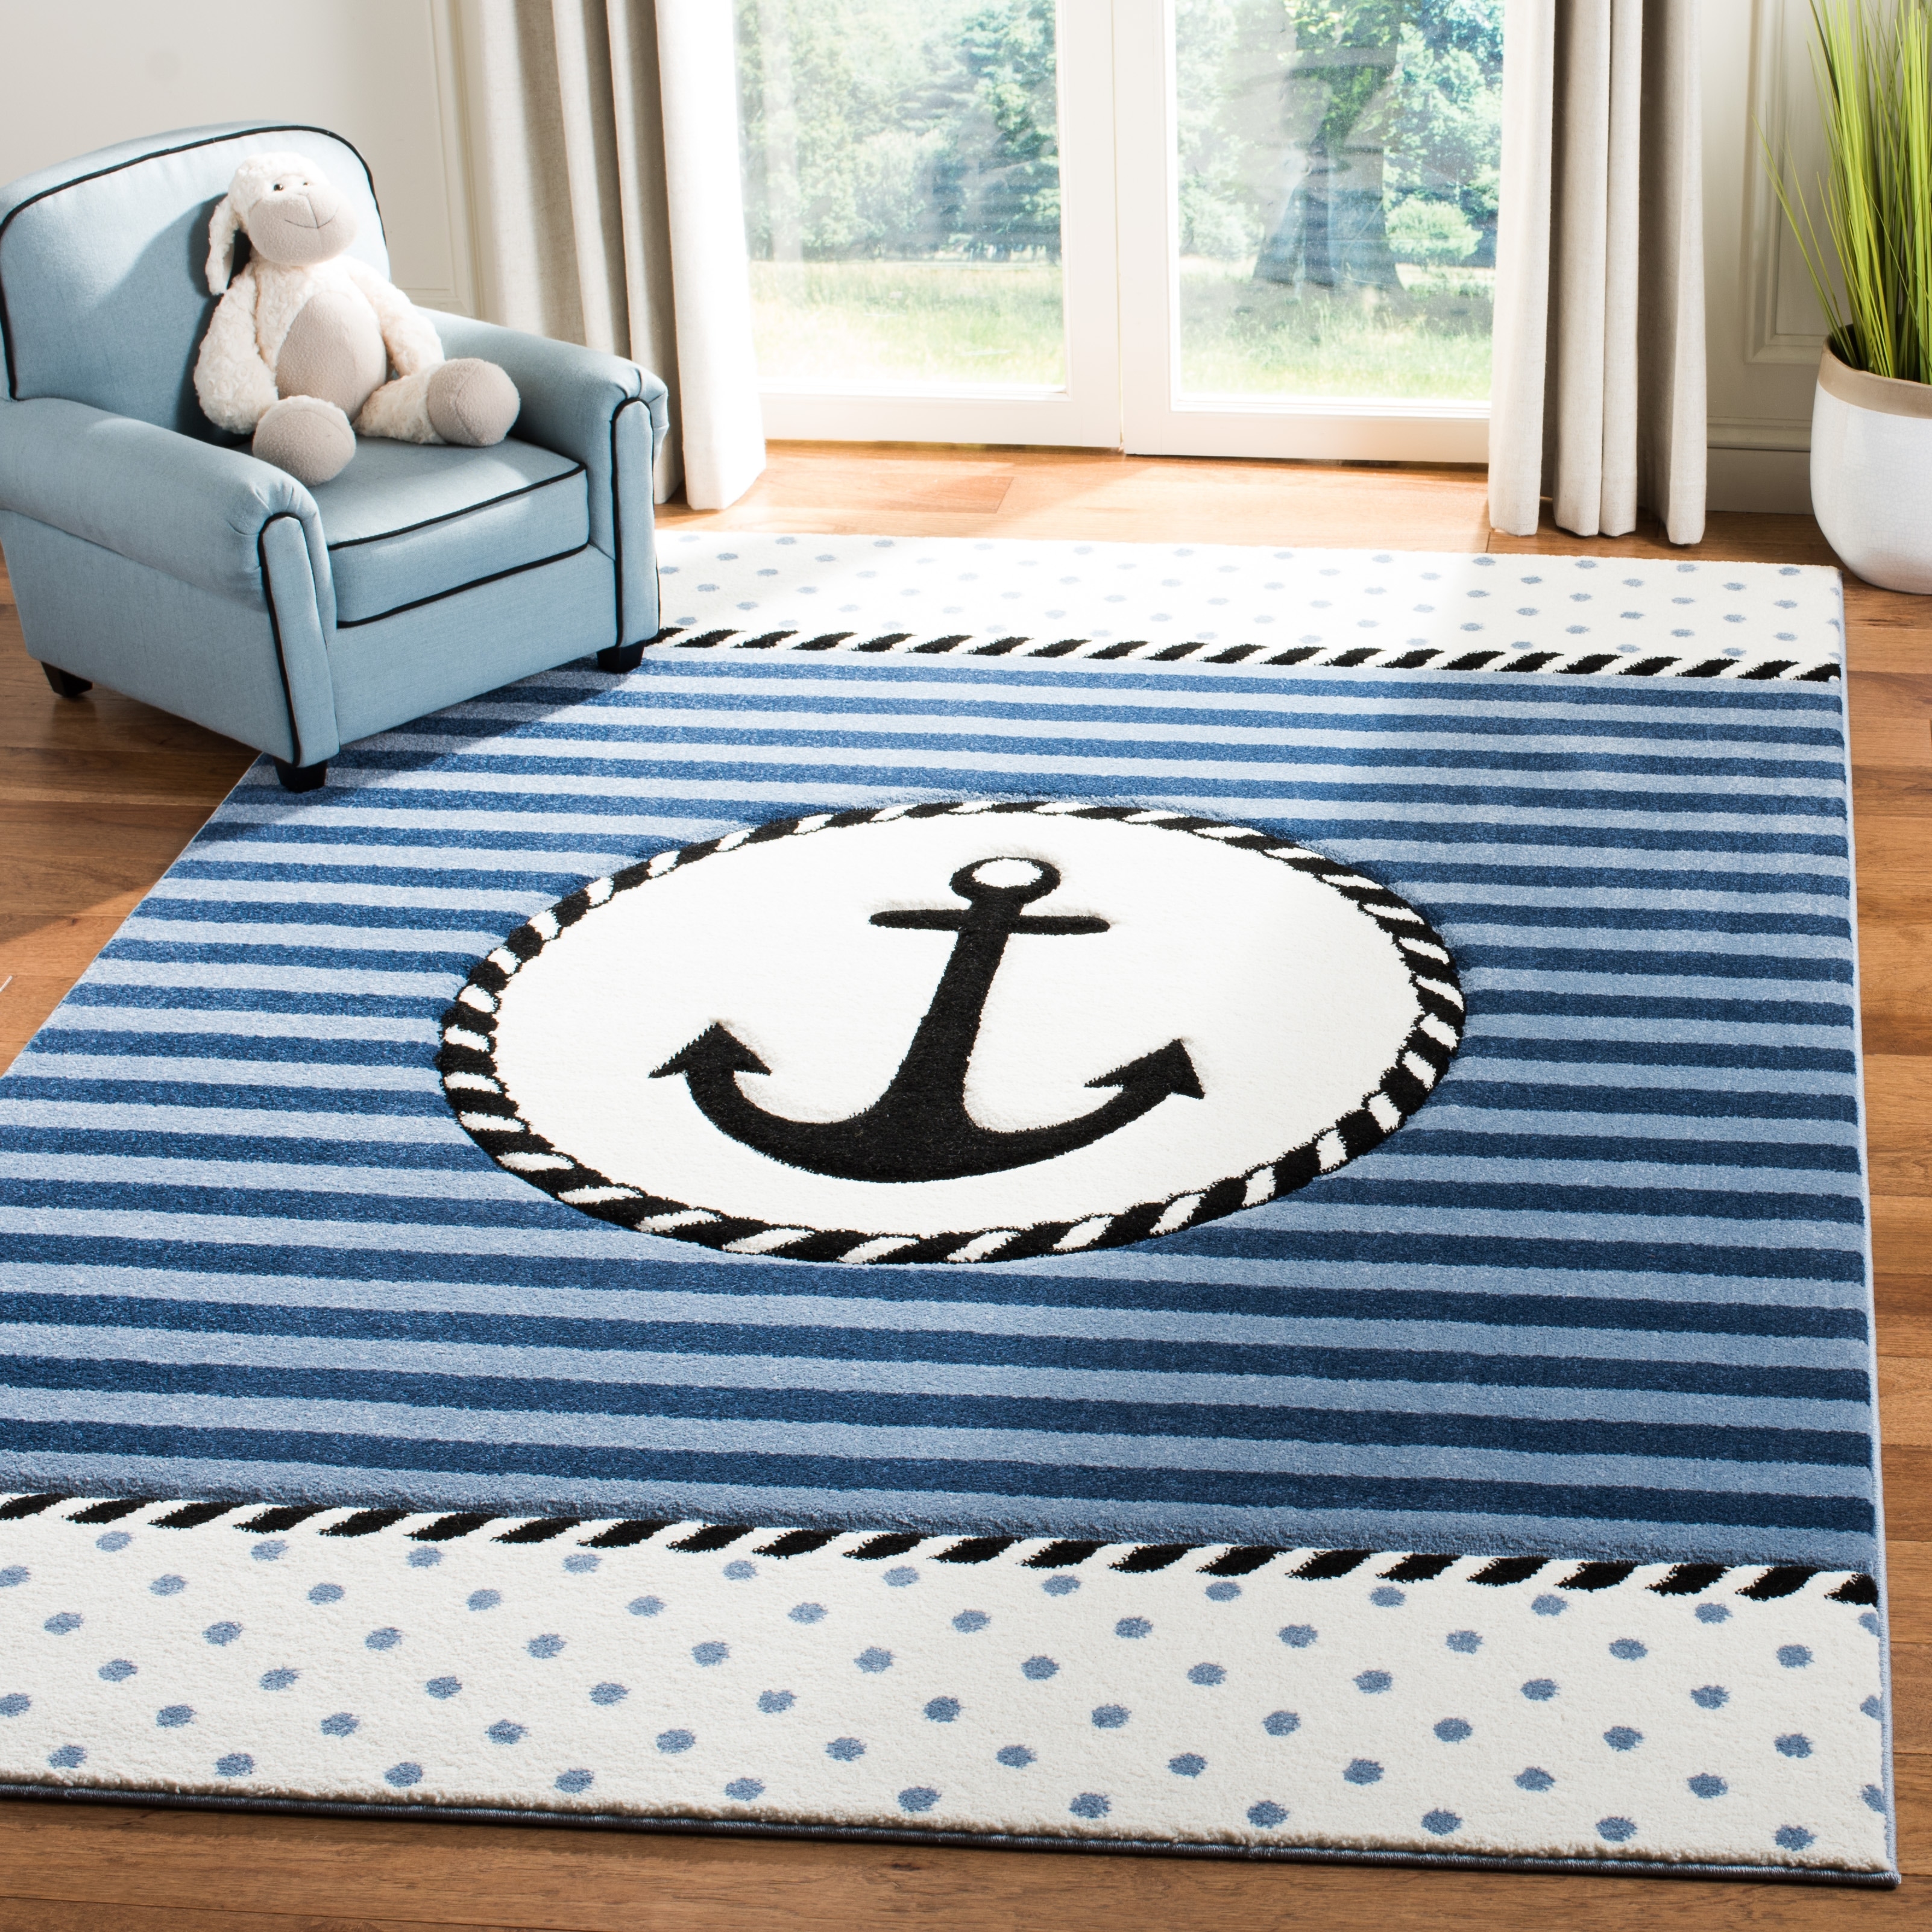 Vintage Carpet Round, Round Anchor Carpet, Blue Carpet Anchor